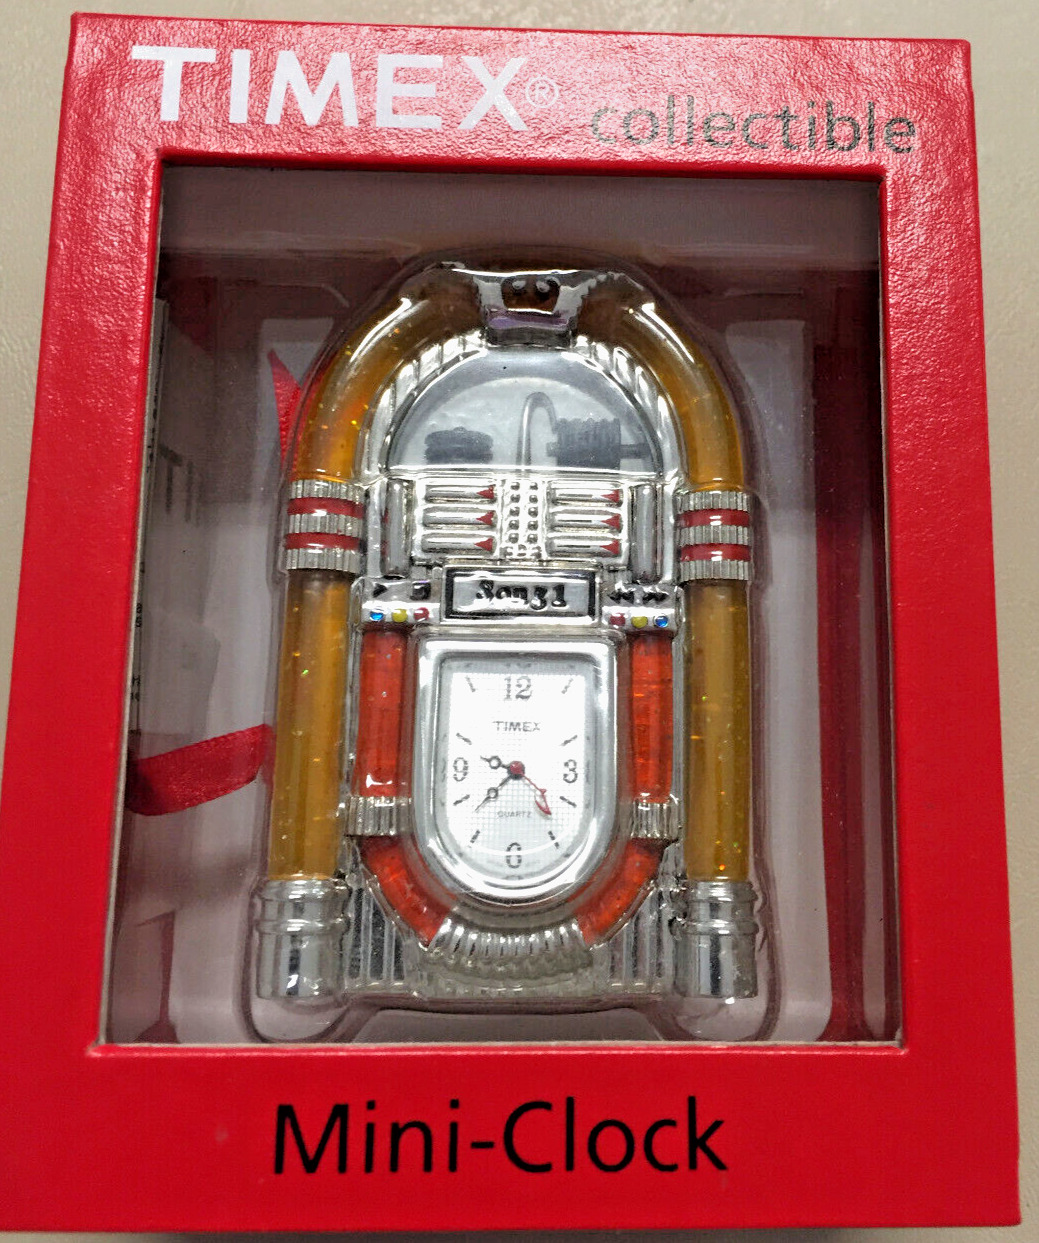 TIMEX JUKEBOX COLLECTIBLE MINI-CLOCK